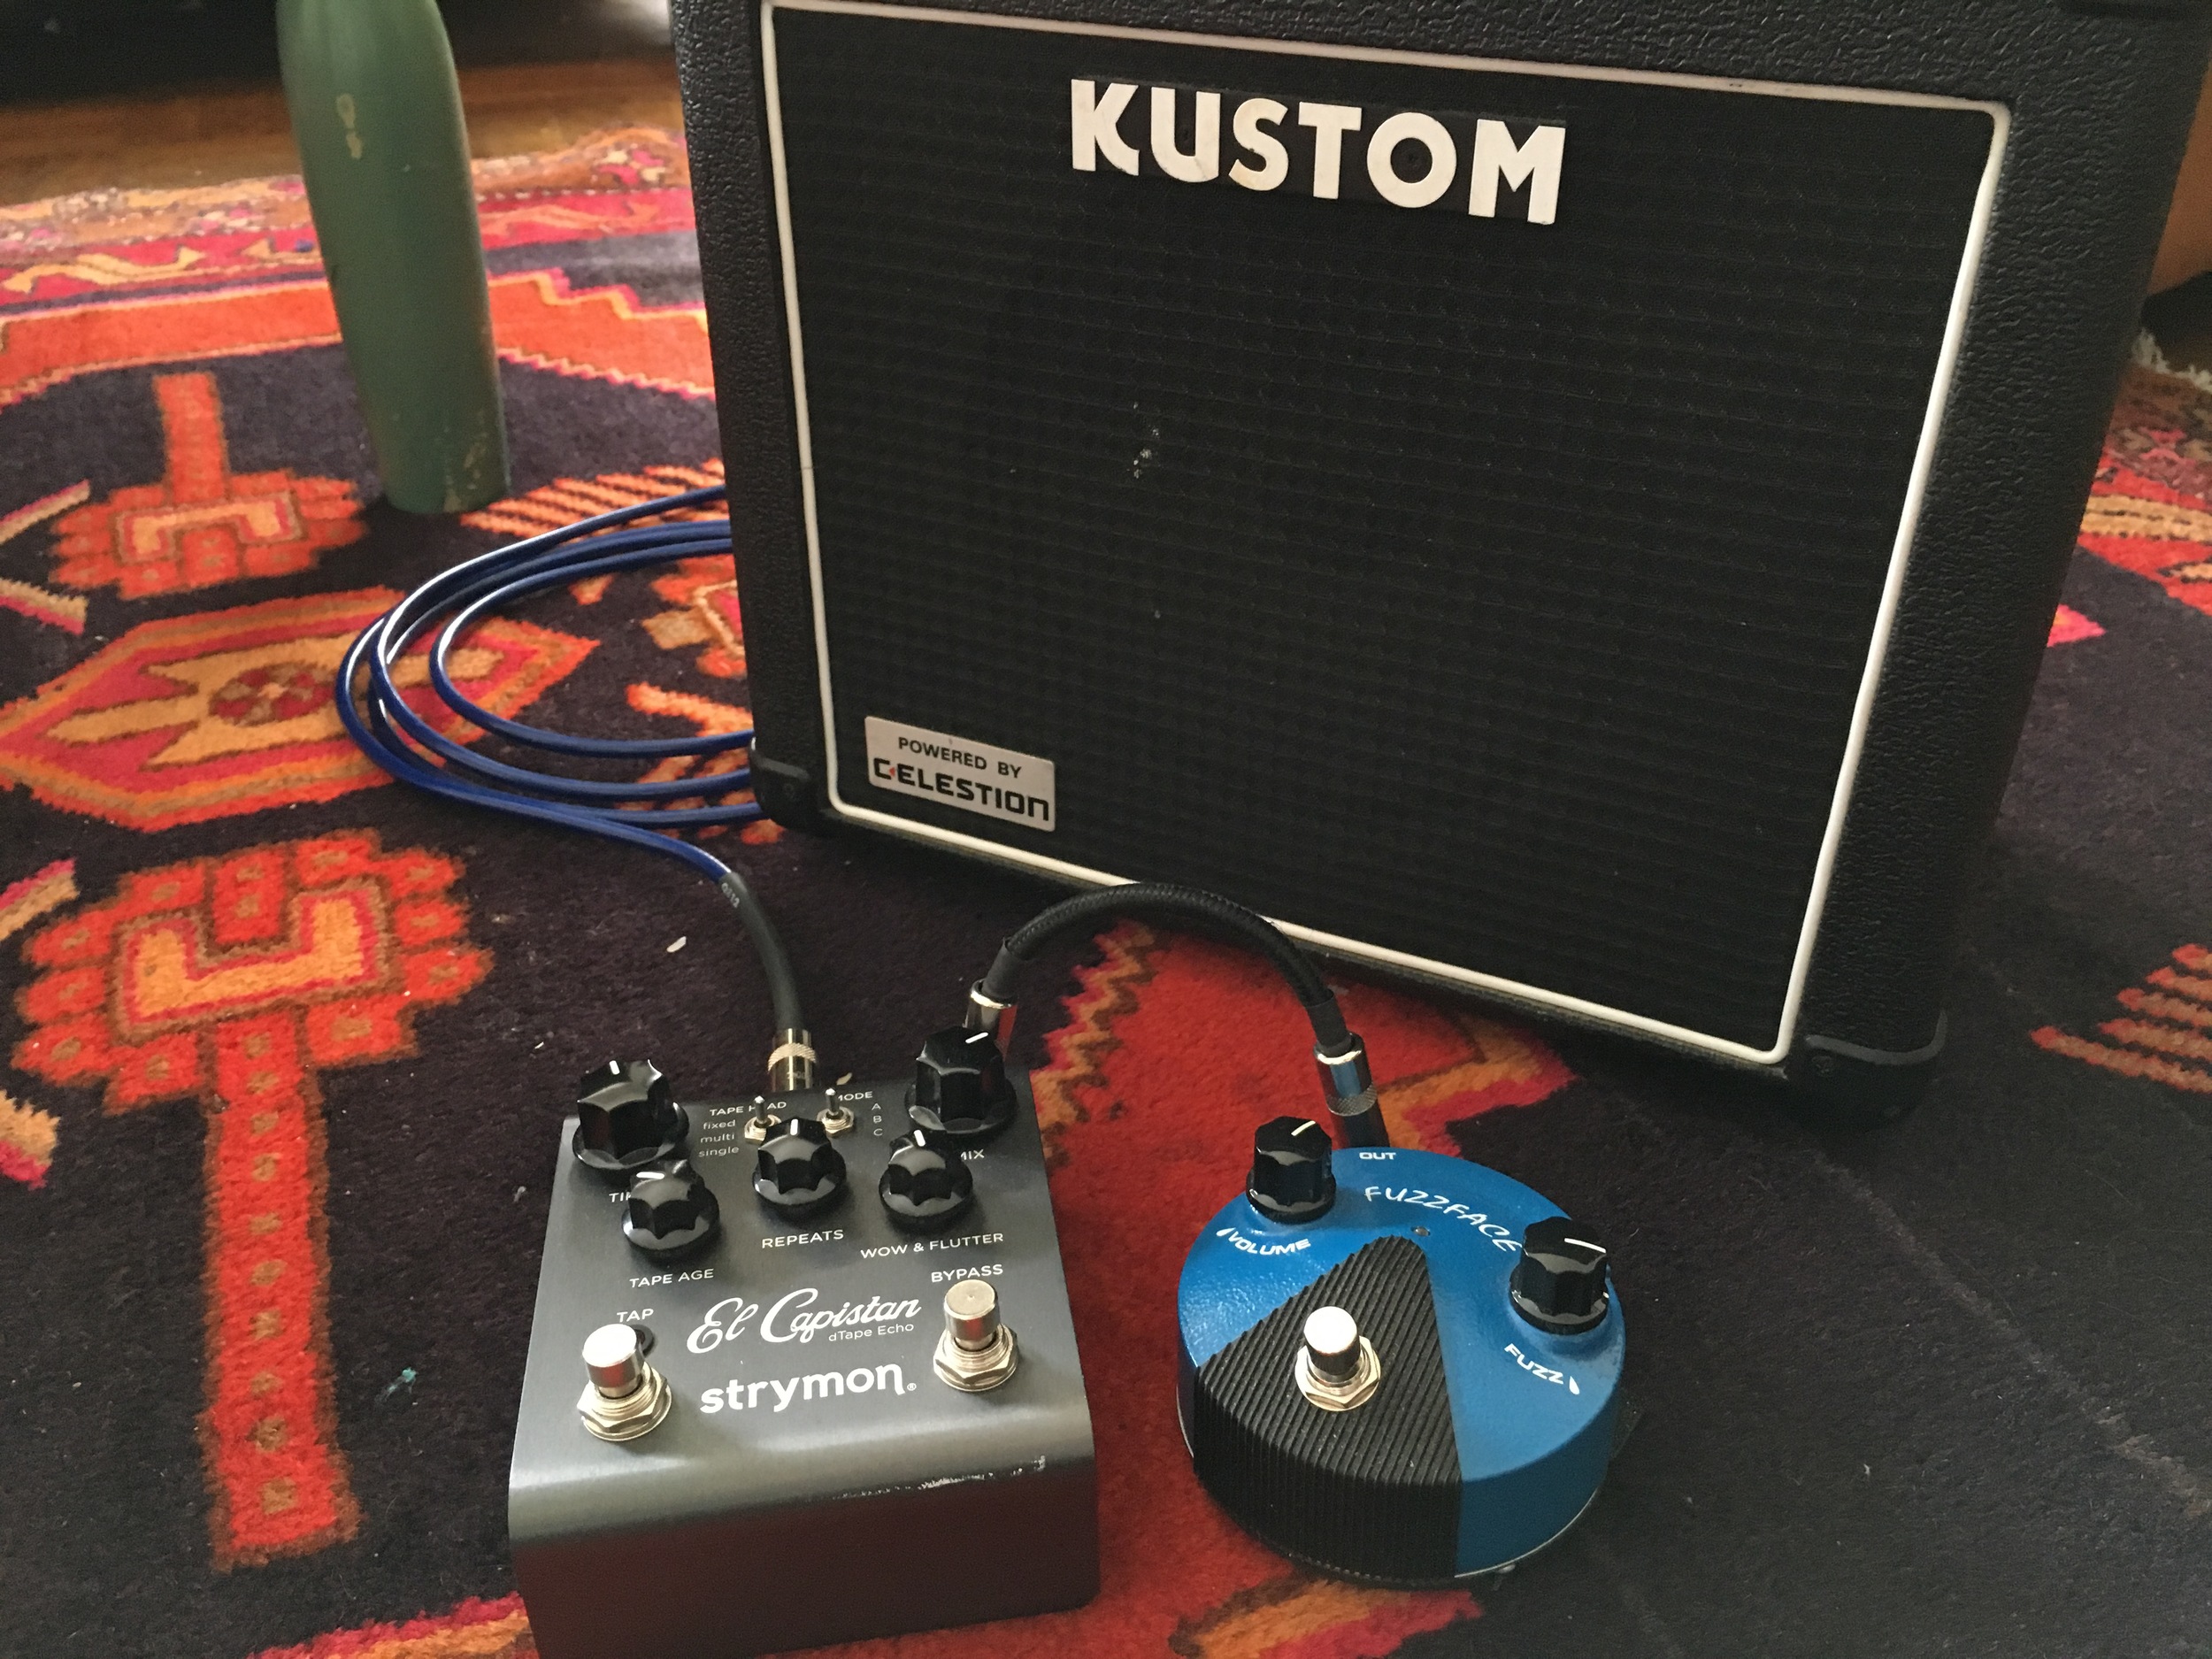  Dunlop Fuzzface Mini, Strymon El Capistan, and a Kustom practice amp. 